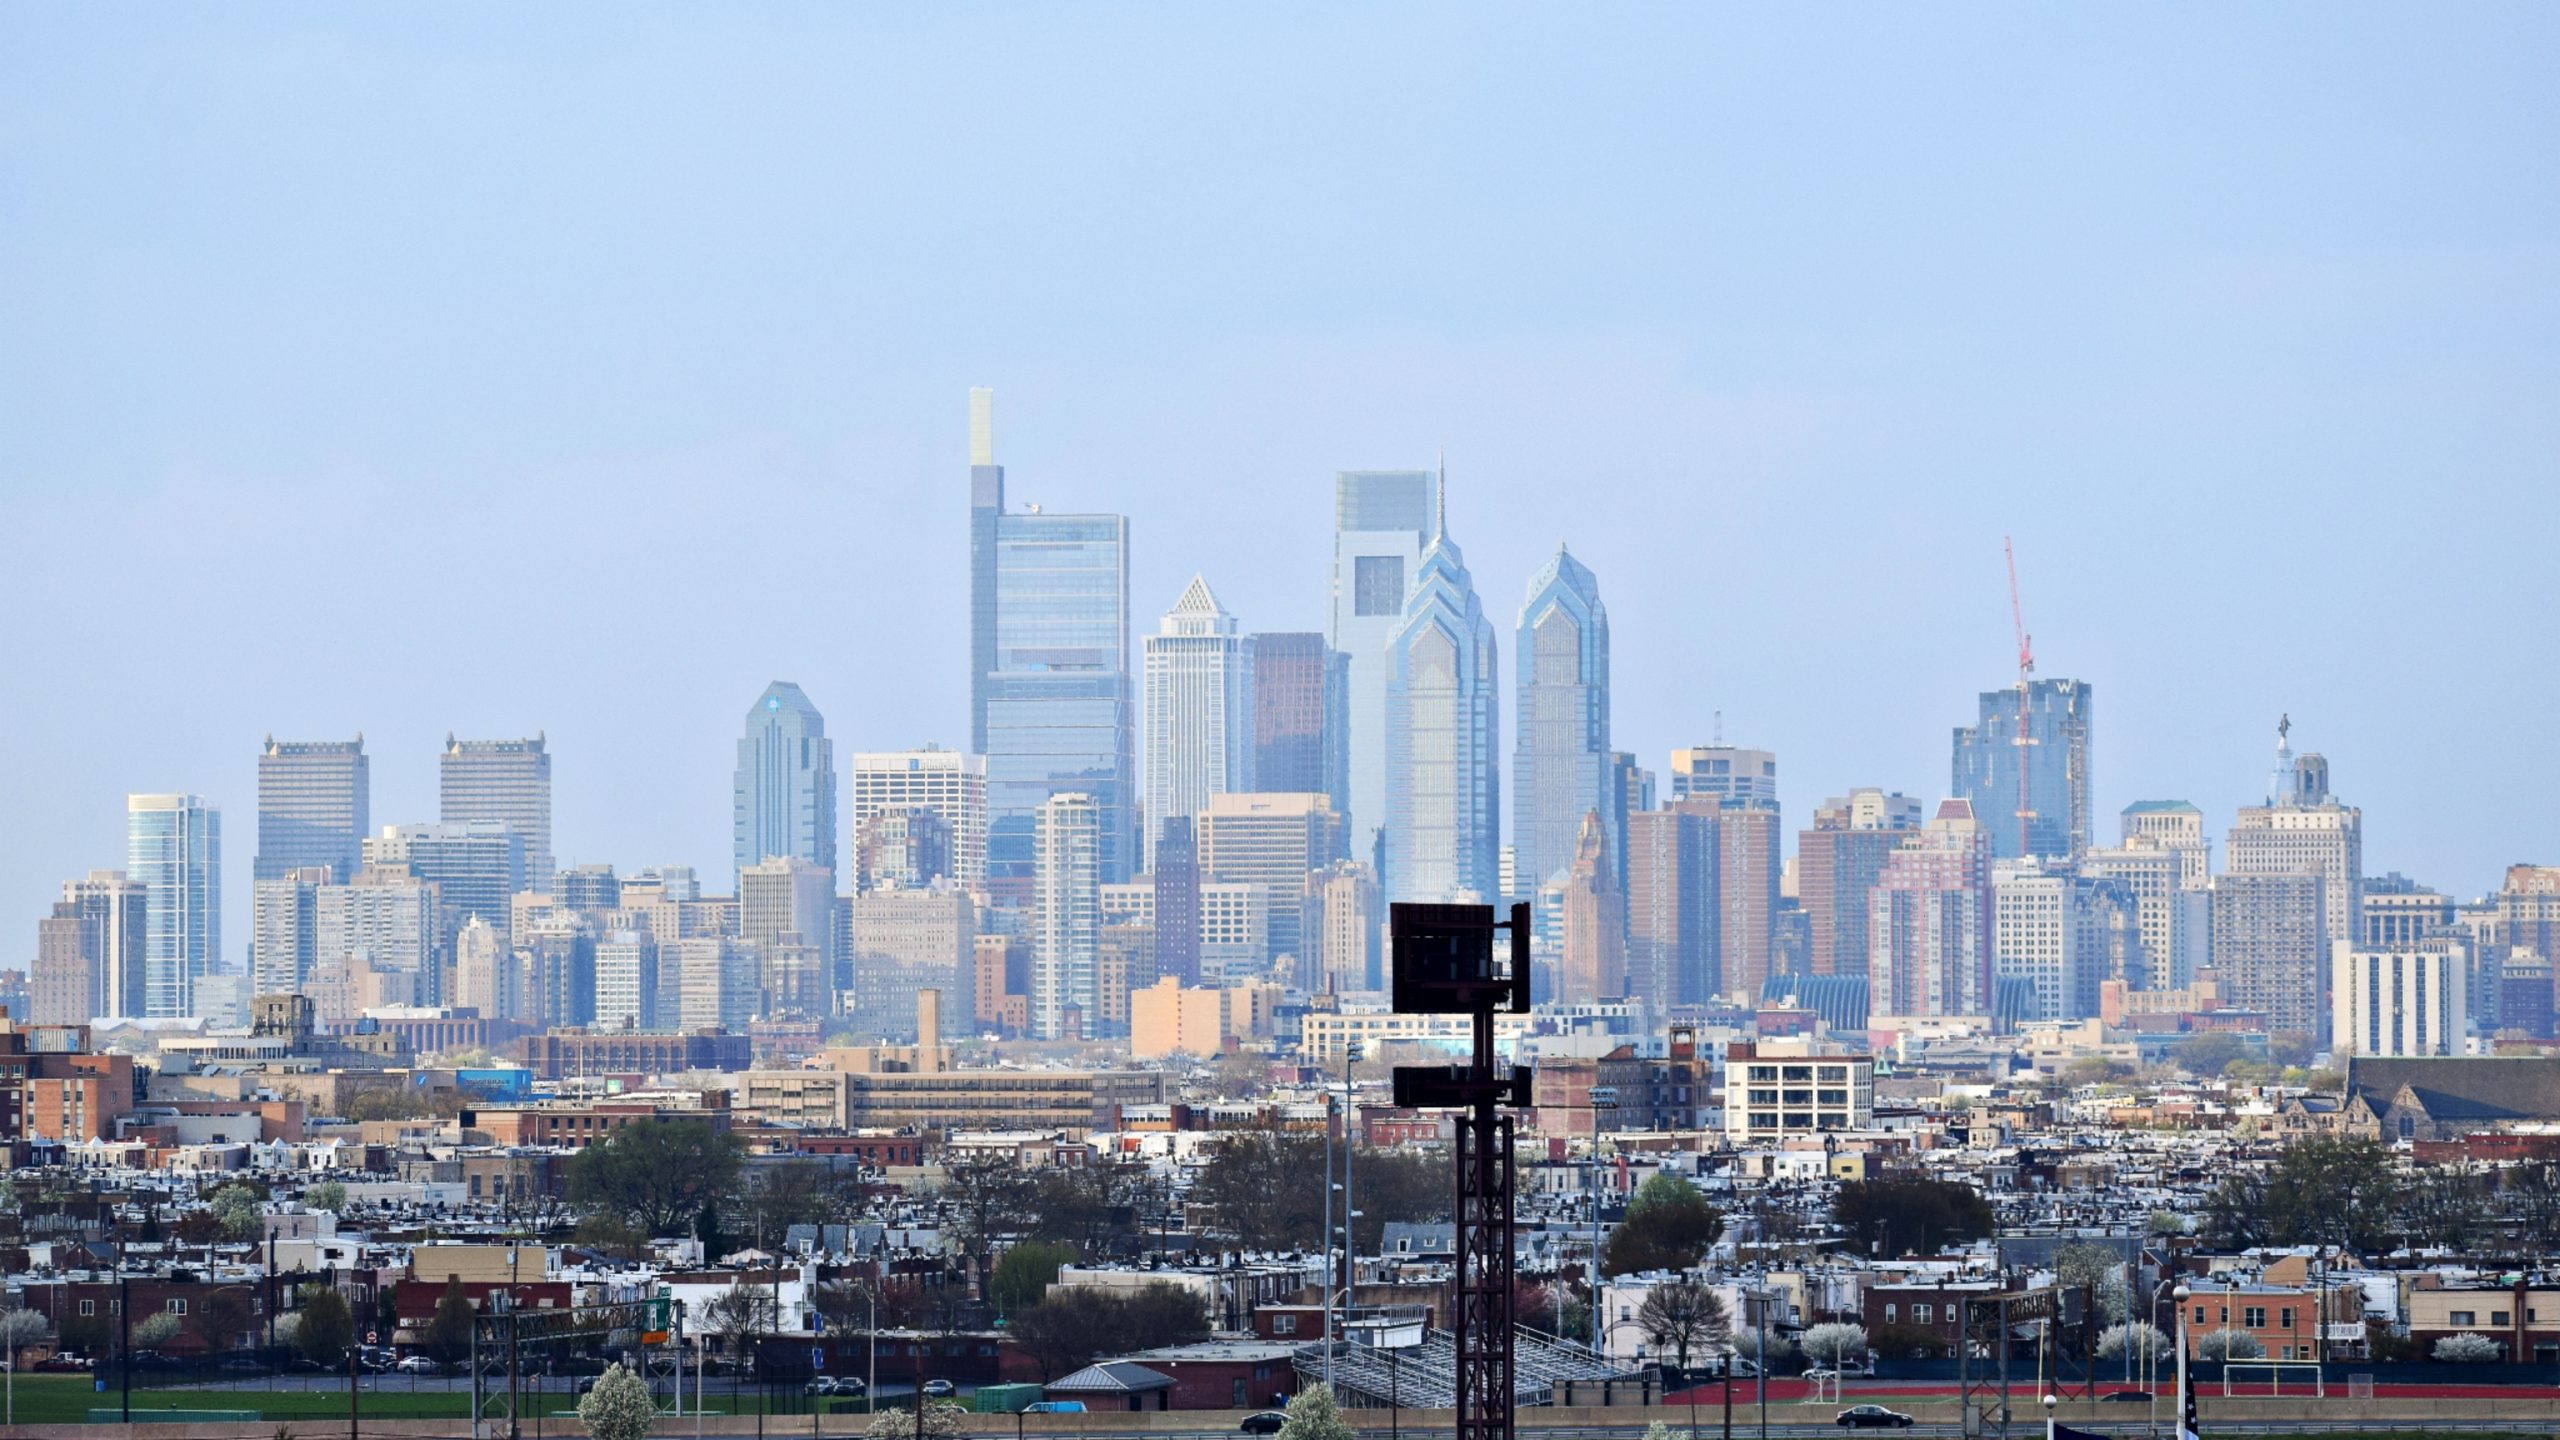 Philadelphia skyline 2019 from Citizens Bank Park. Photo by Thomas Koloski